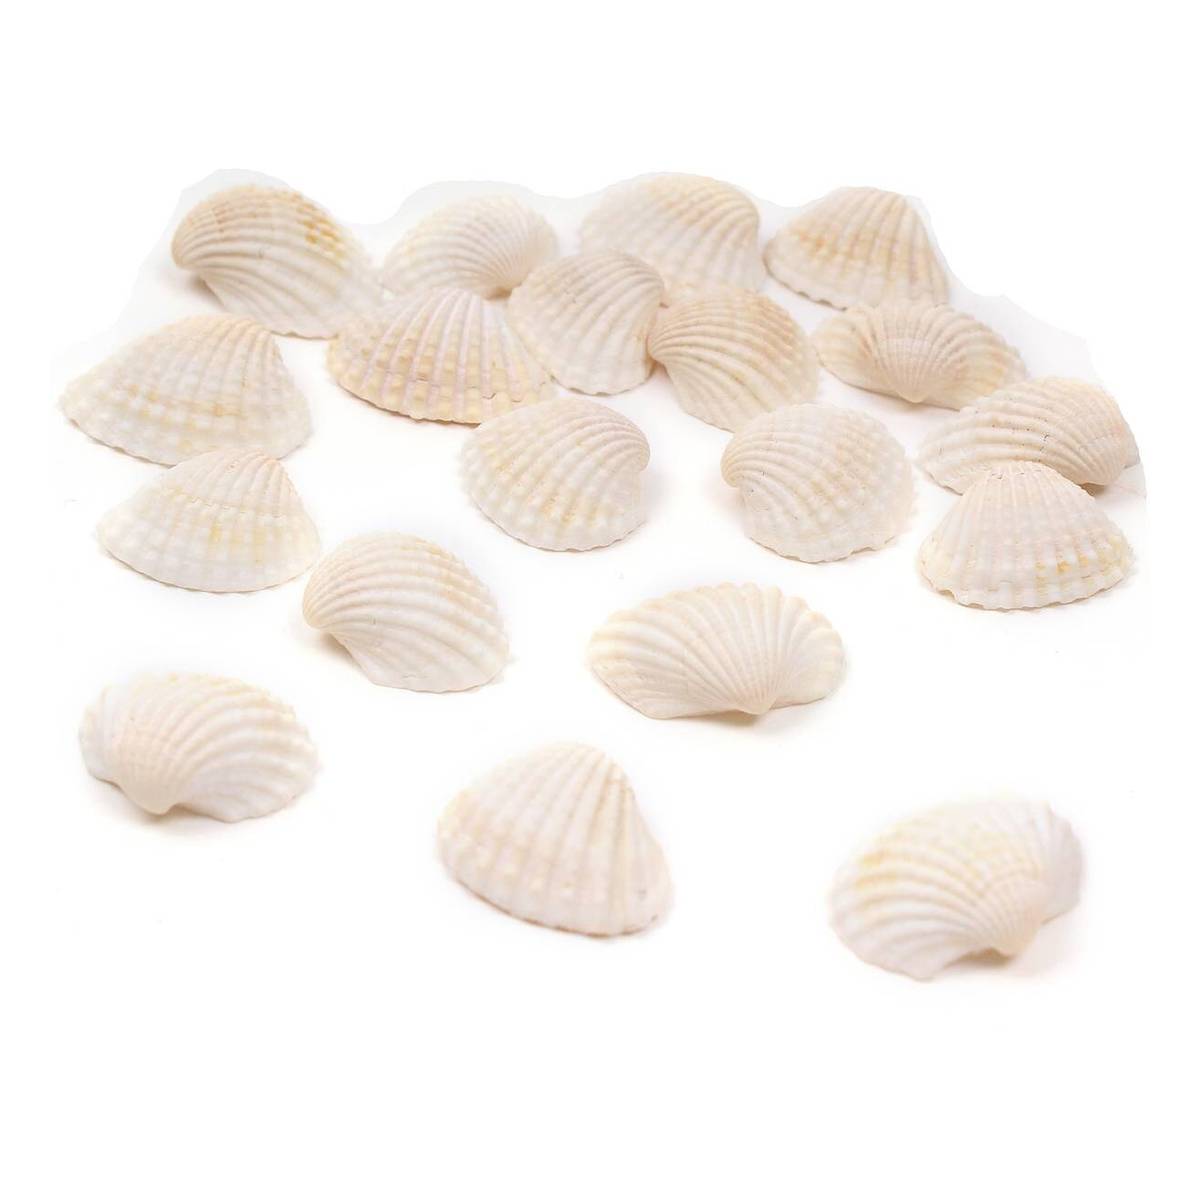 1 Piece Craft Supplies Mini Colorful Glitter Sea Shells 